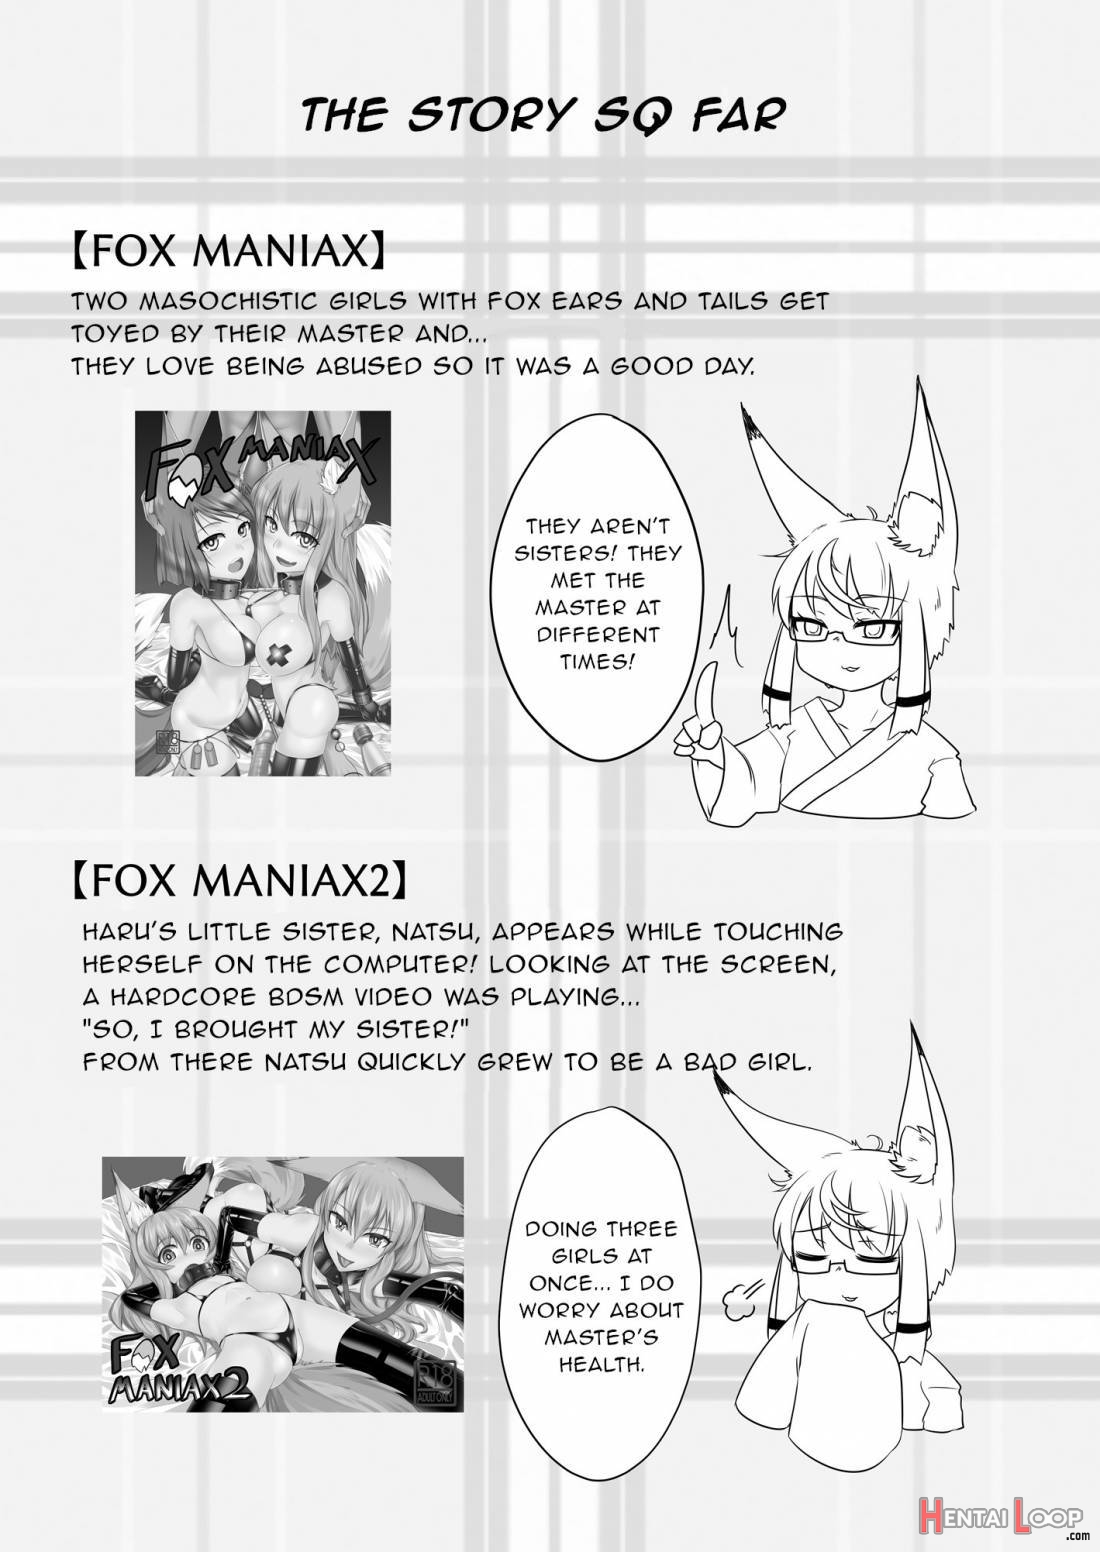 Fox Maniax3 page 2